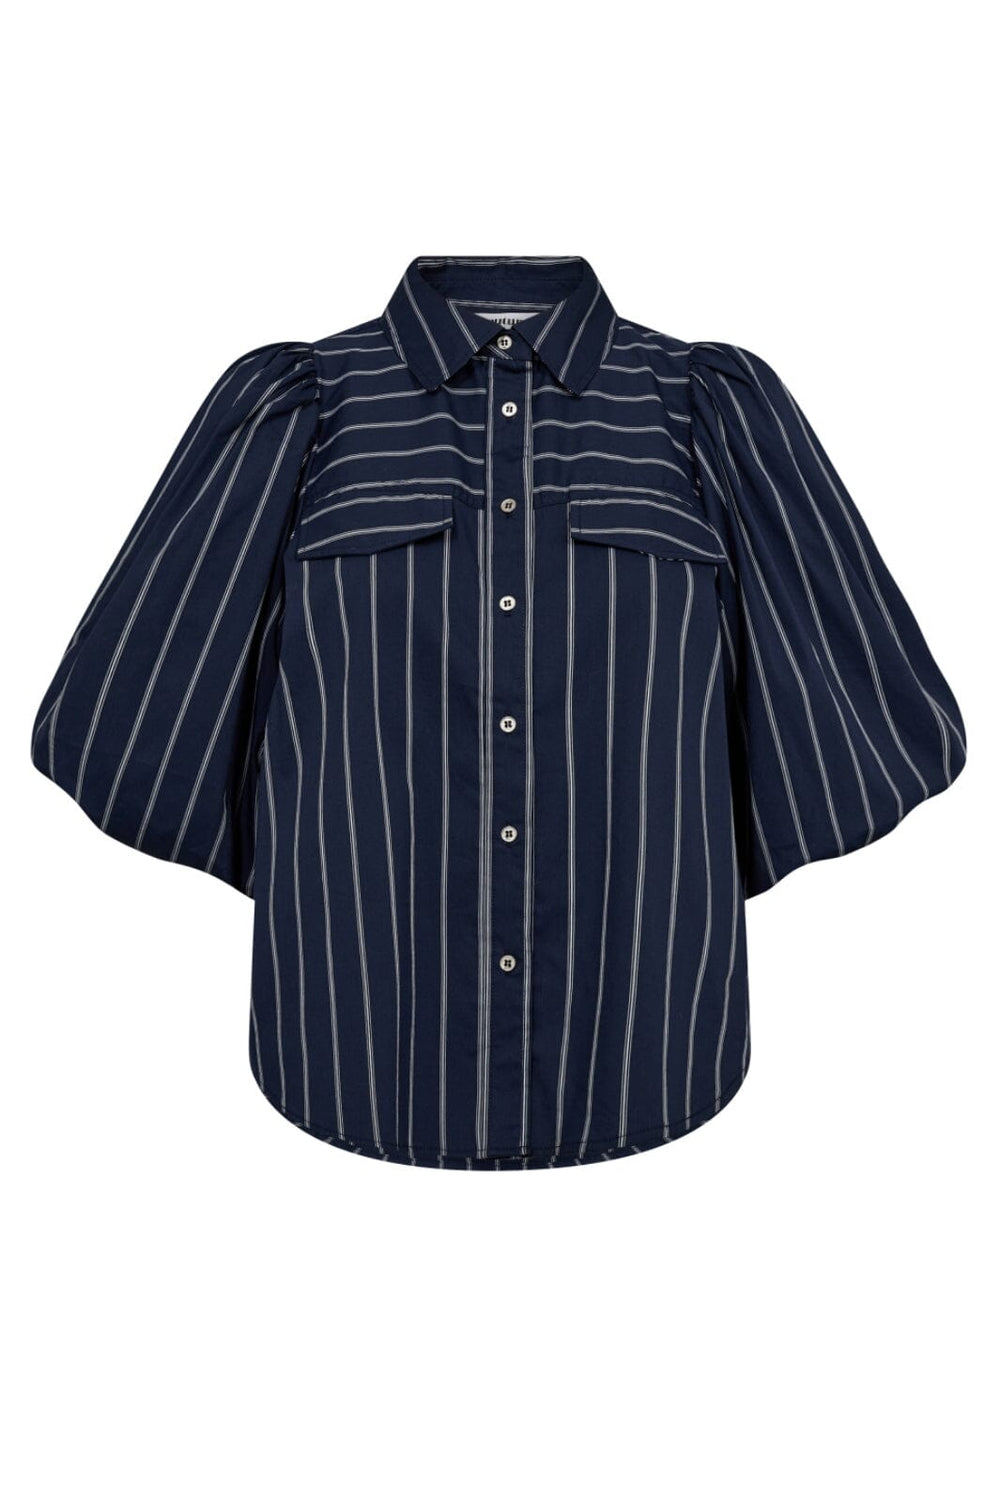 Co´couture - Sebicc Stripe Puff Shirt 35543 - 120 Navy Skjorter 